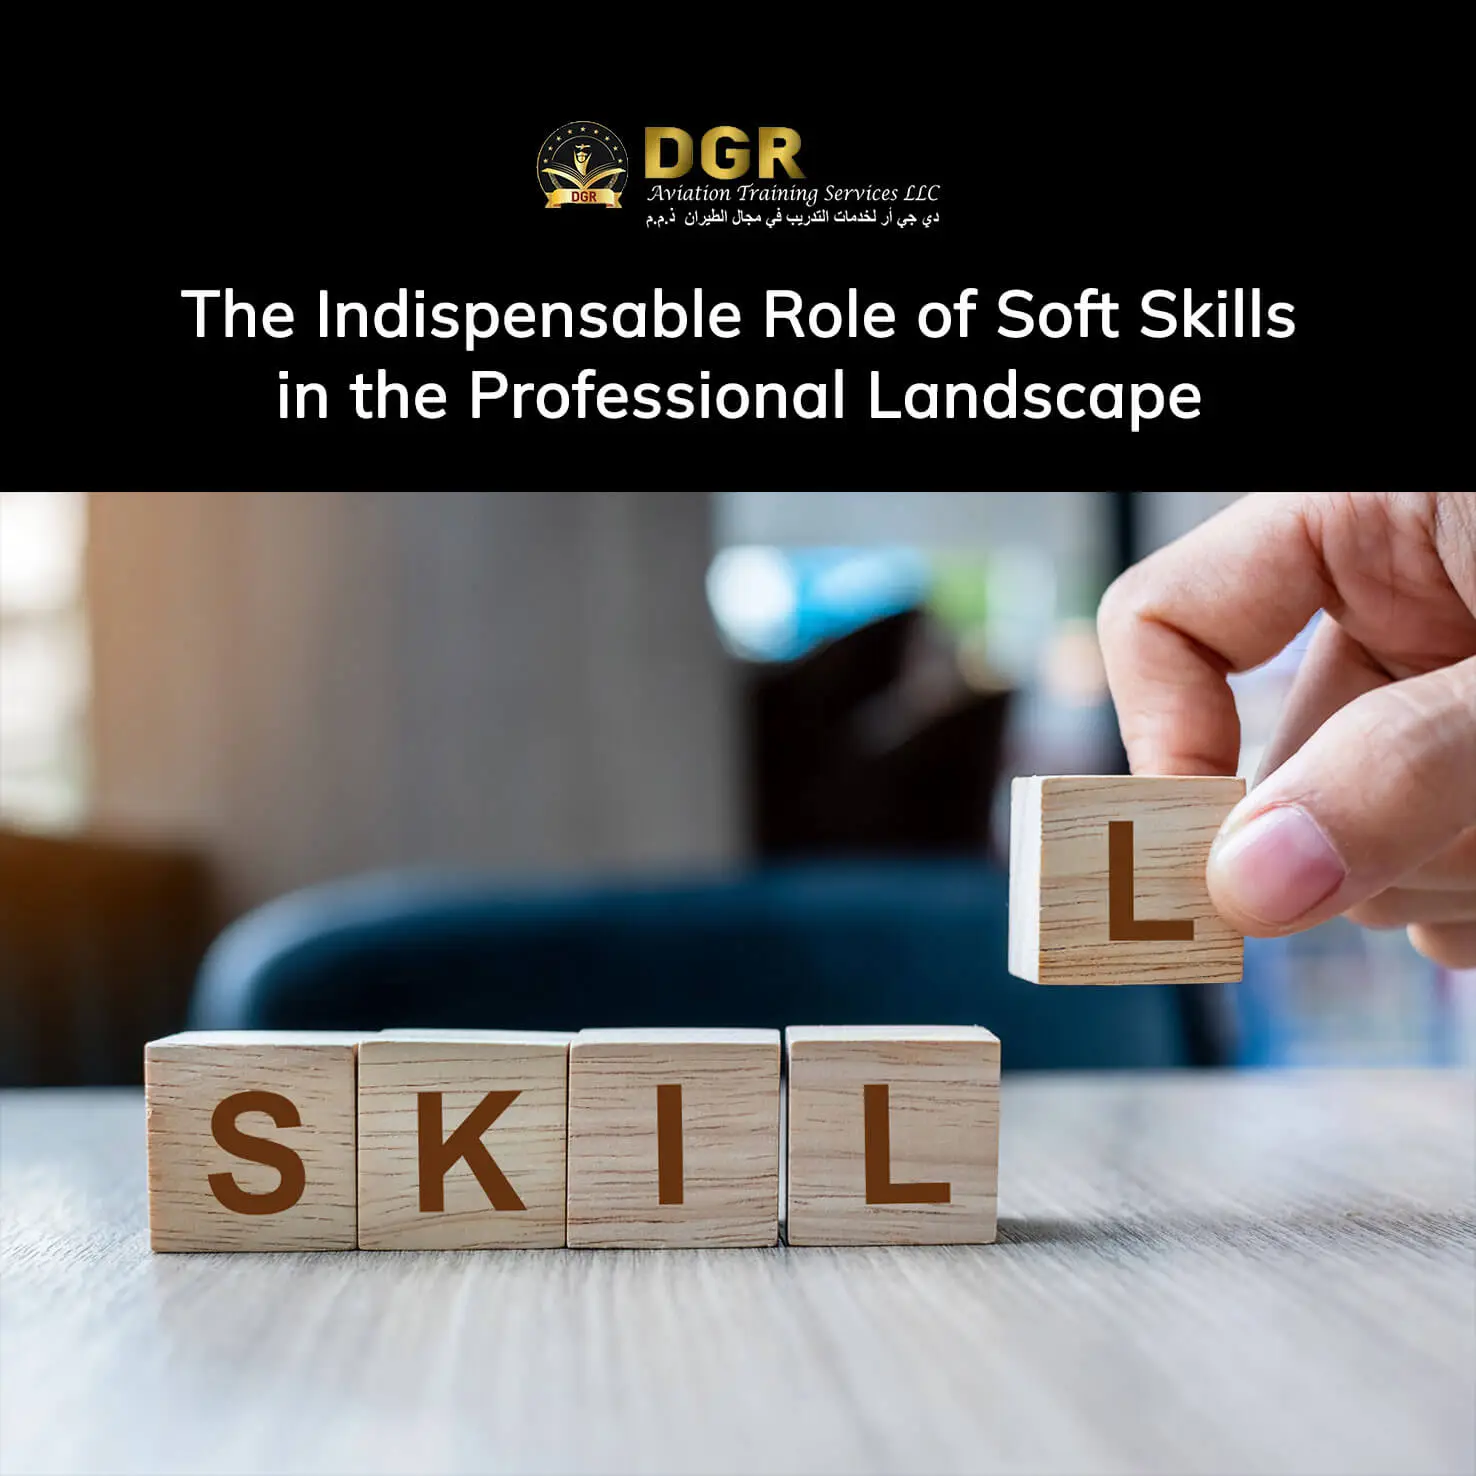 soft skills training companies in dubai